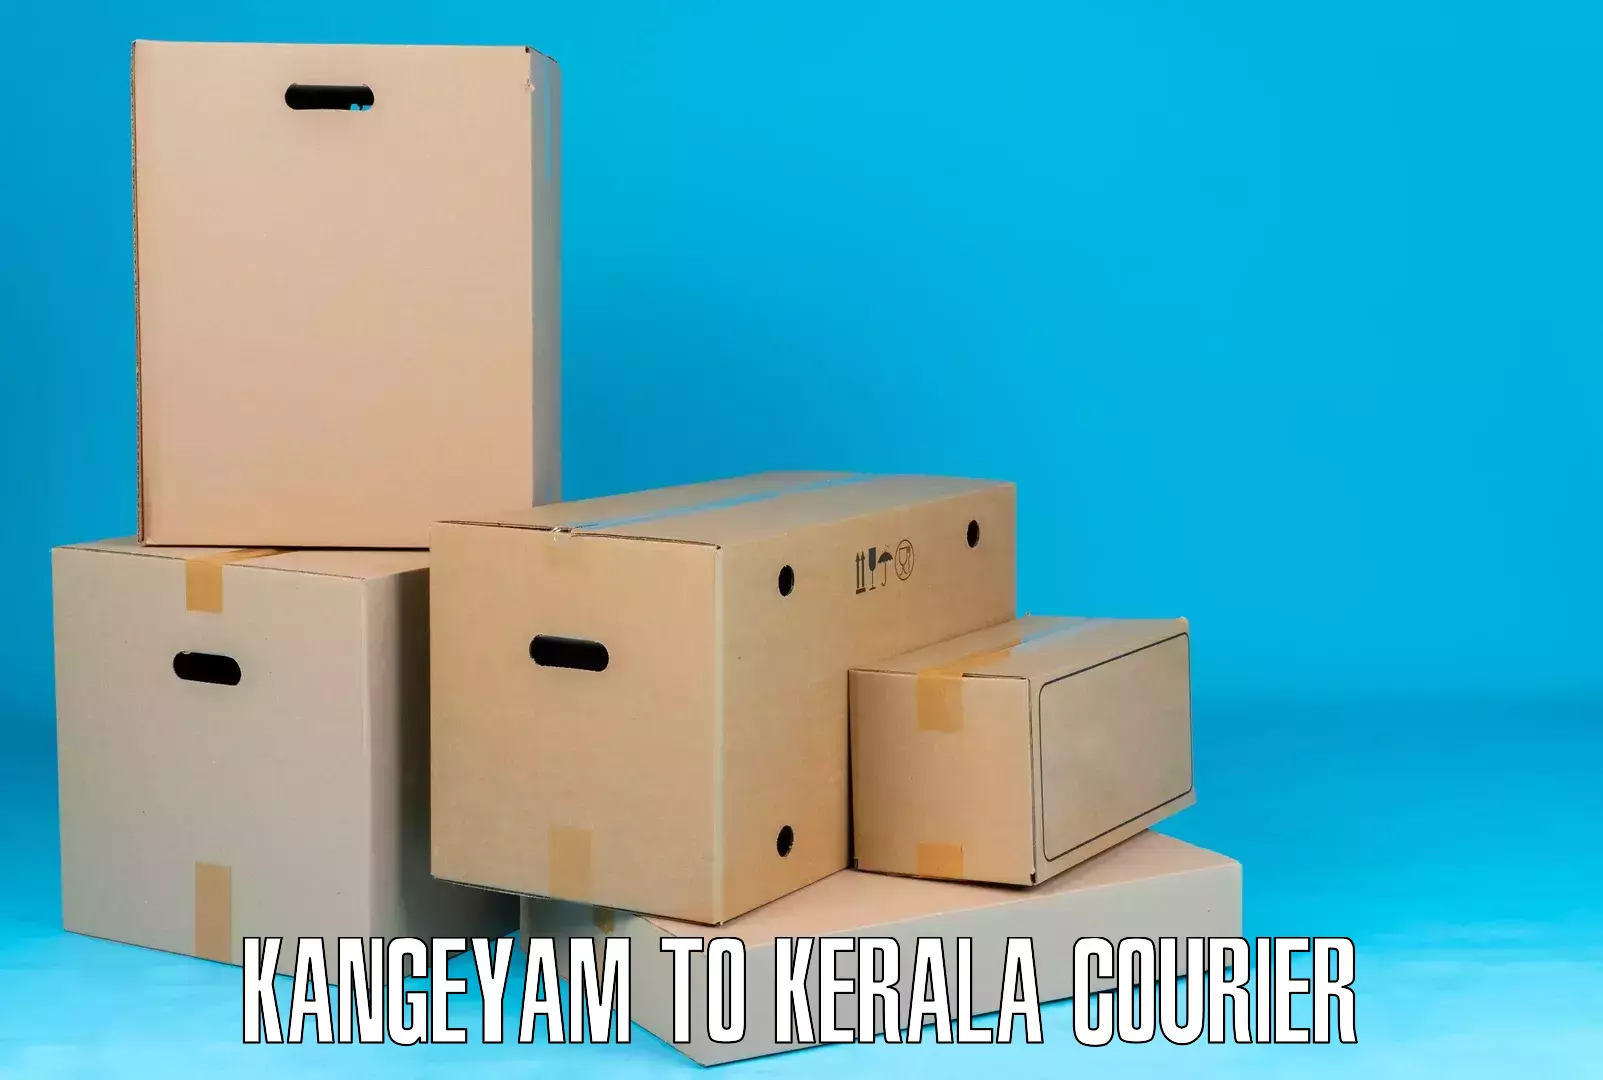 Bulk shipping discounts Kangeyam to Kochi